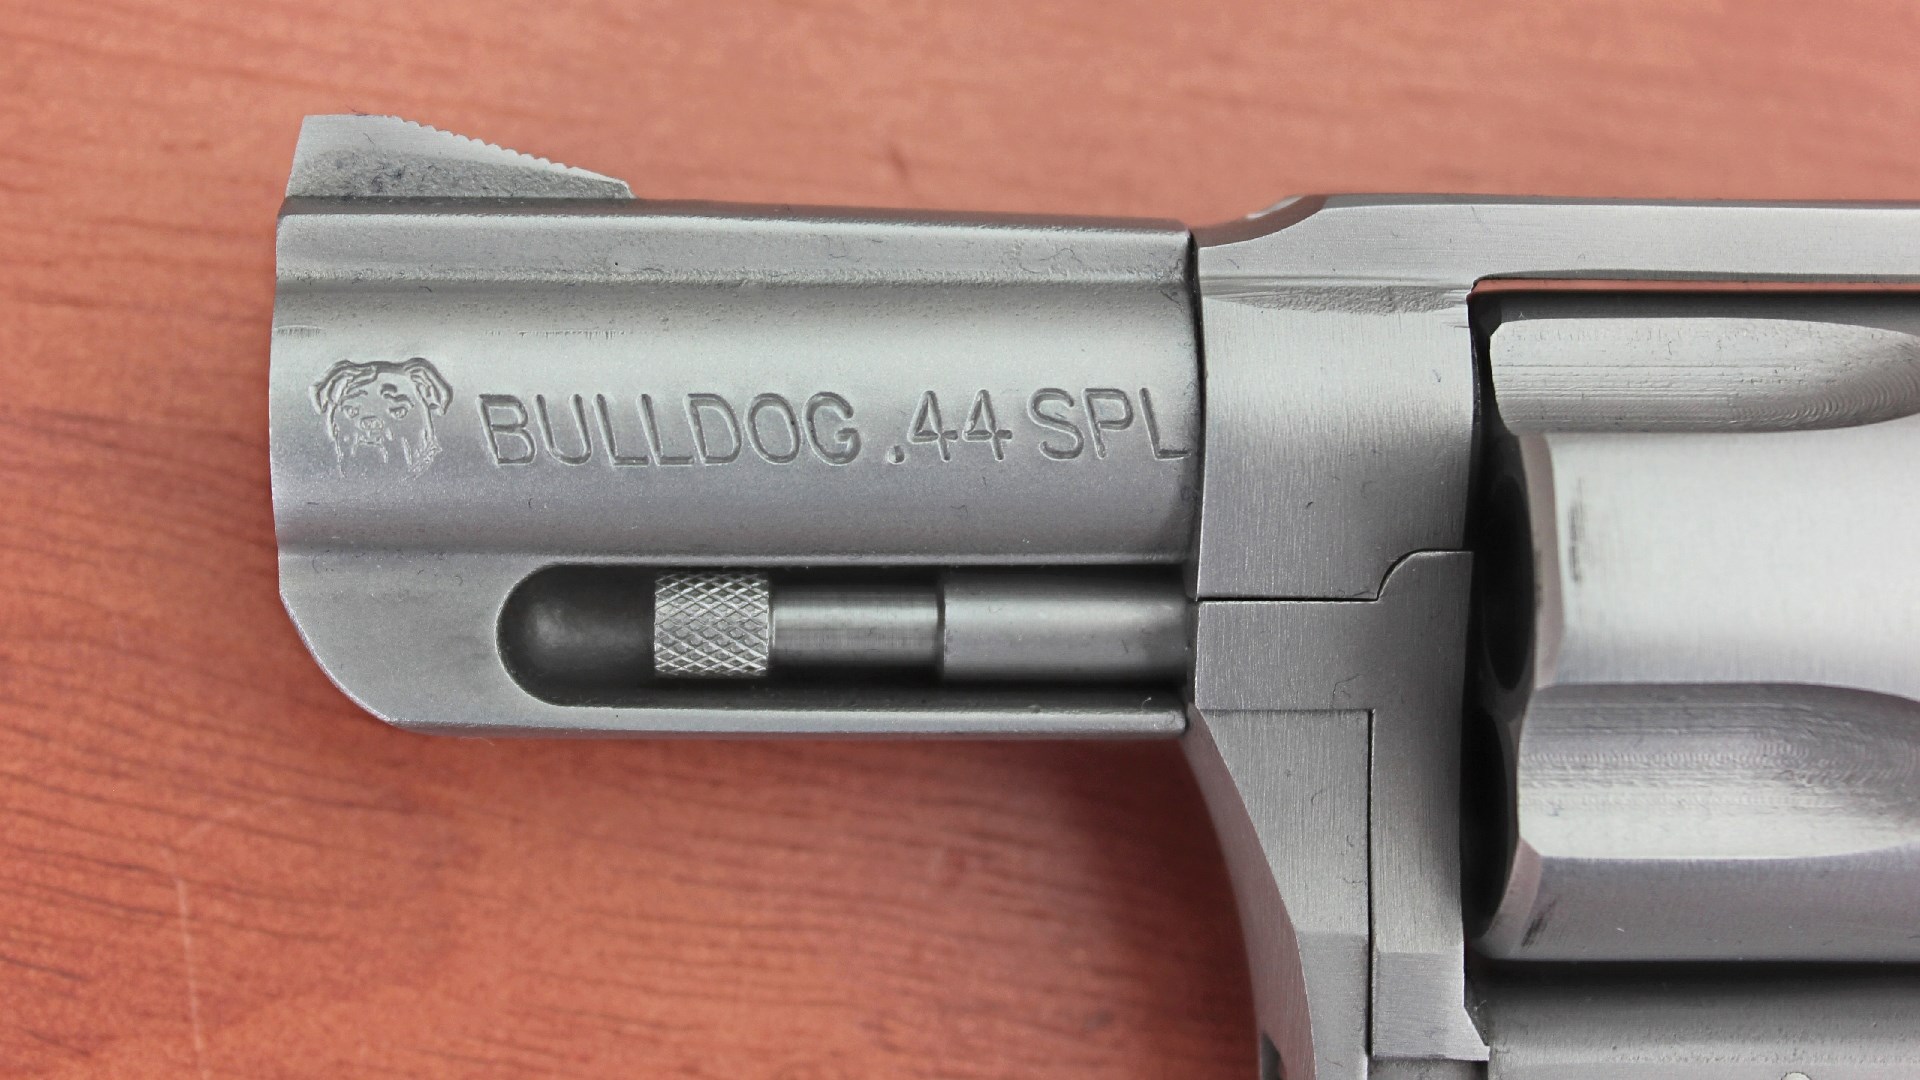 charter arms bulldog .44 spl revolver stainless steel barrel stamp closeup wood table background gun